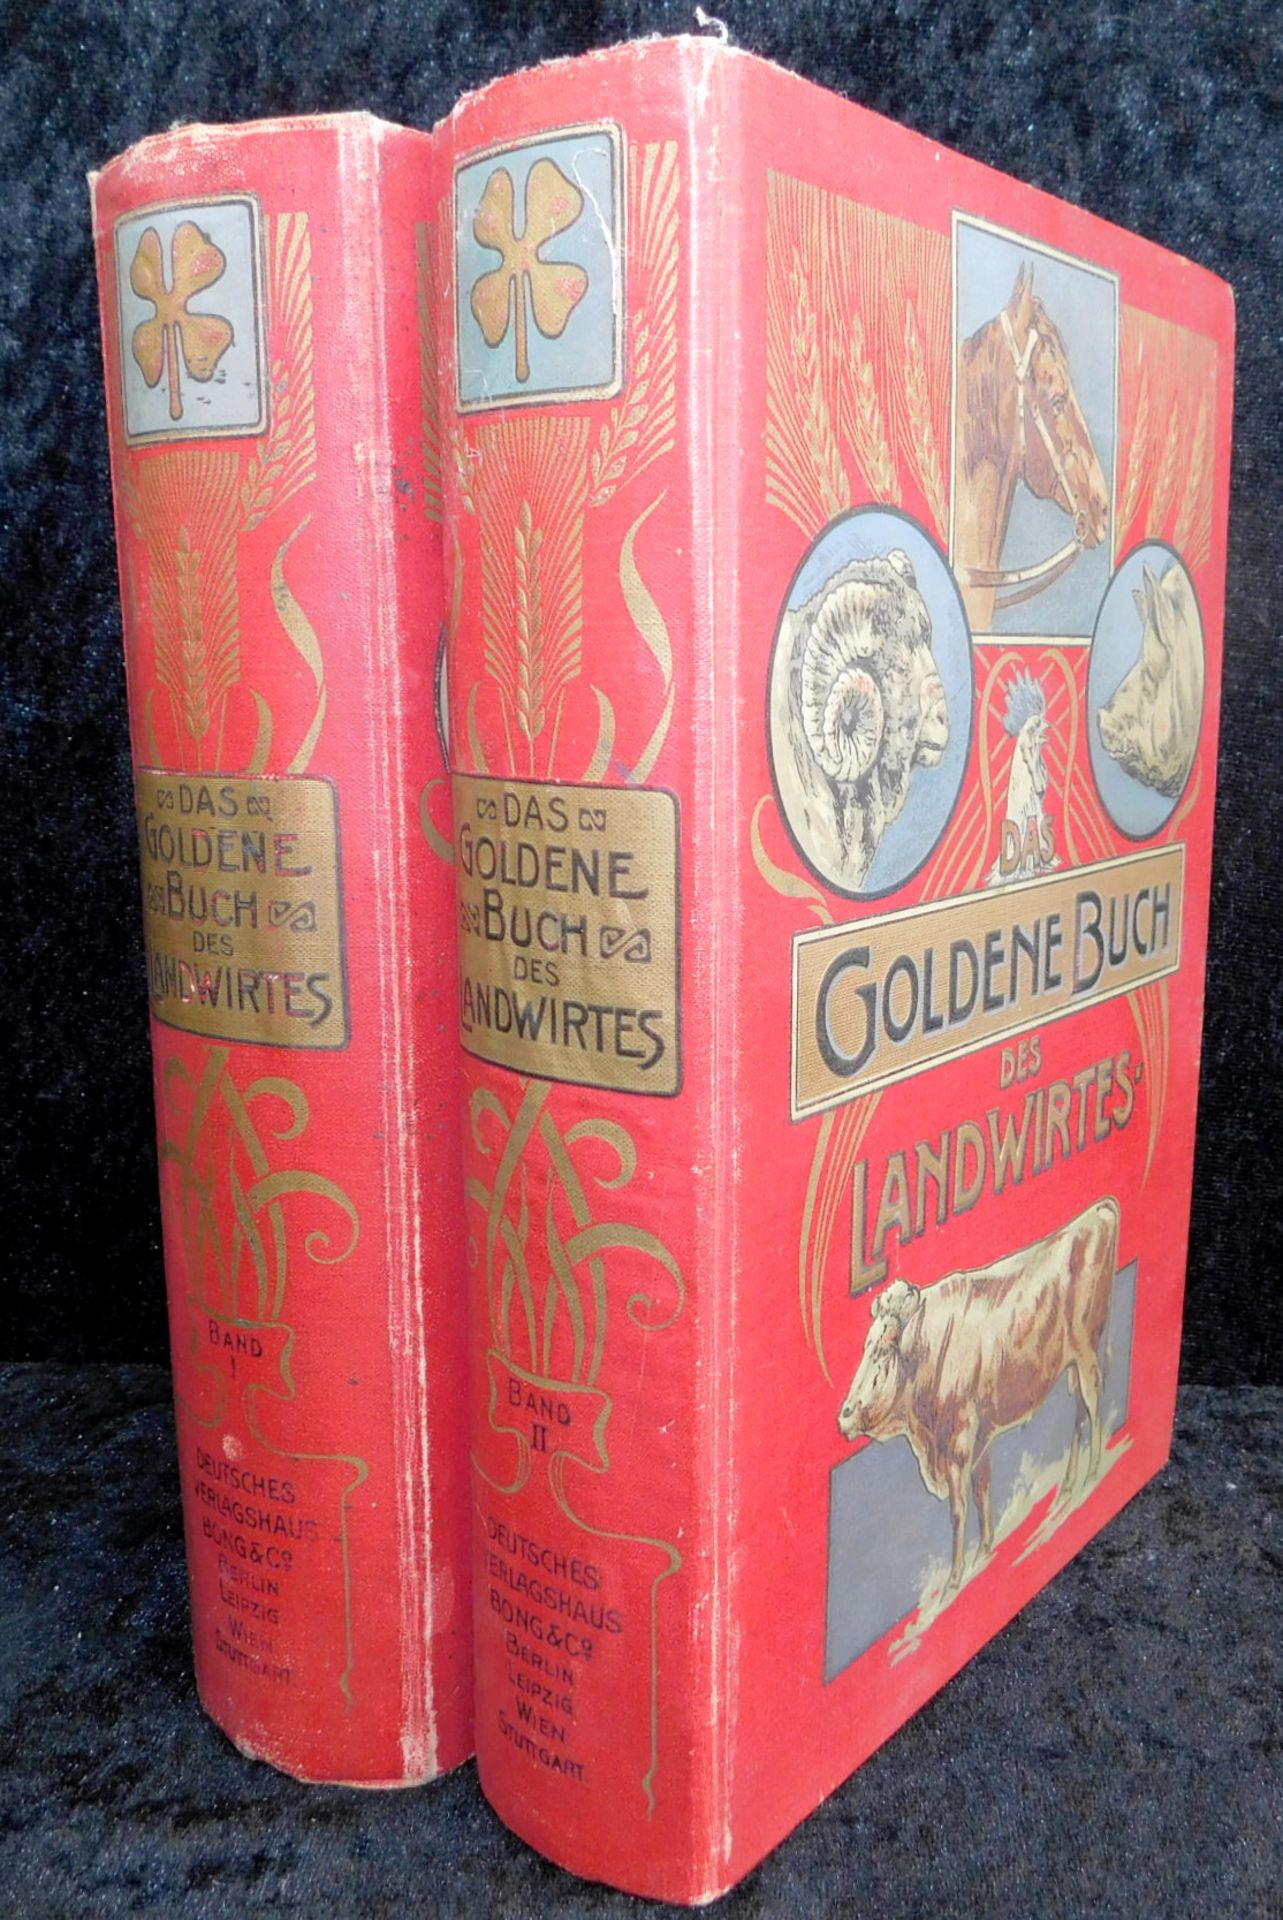 Das Goldene Buch des Landwirtes, Cäsar Rhan, 2 Bände, Deutsches Verlagshaus Bong & Co., Berlin, 1897